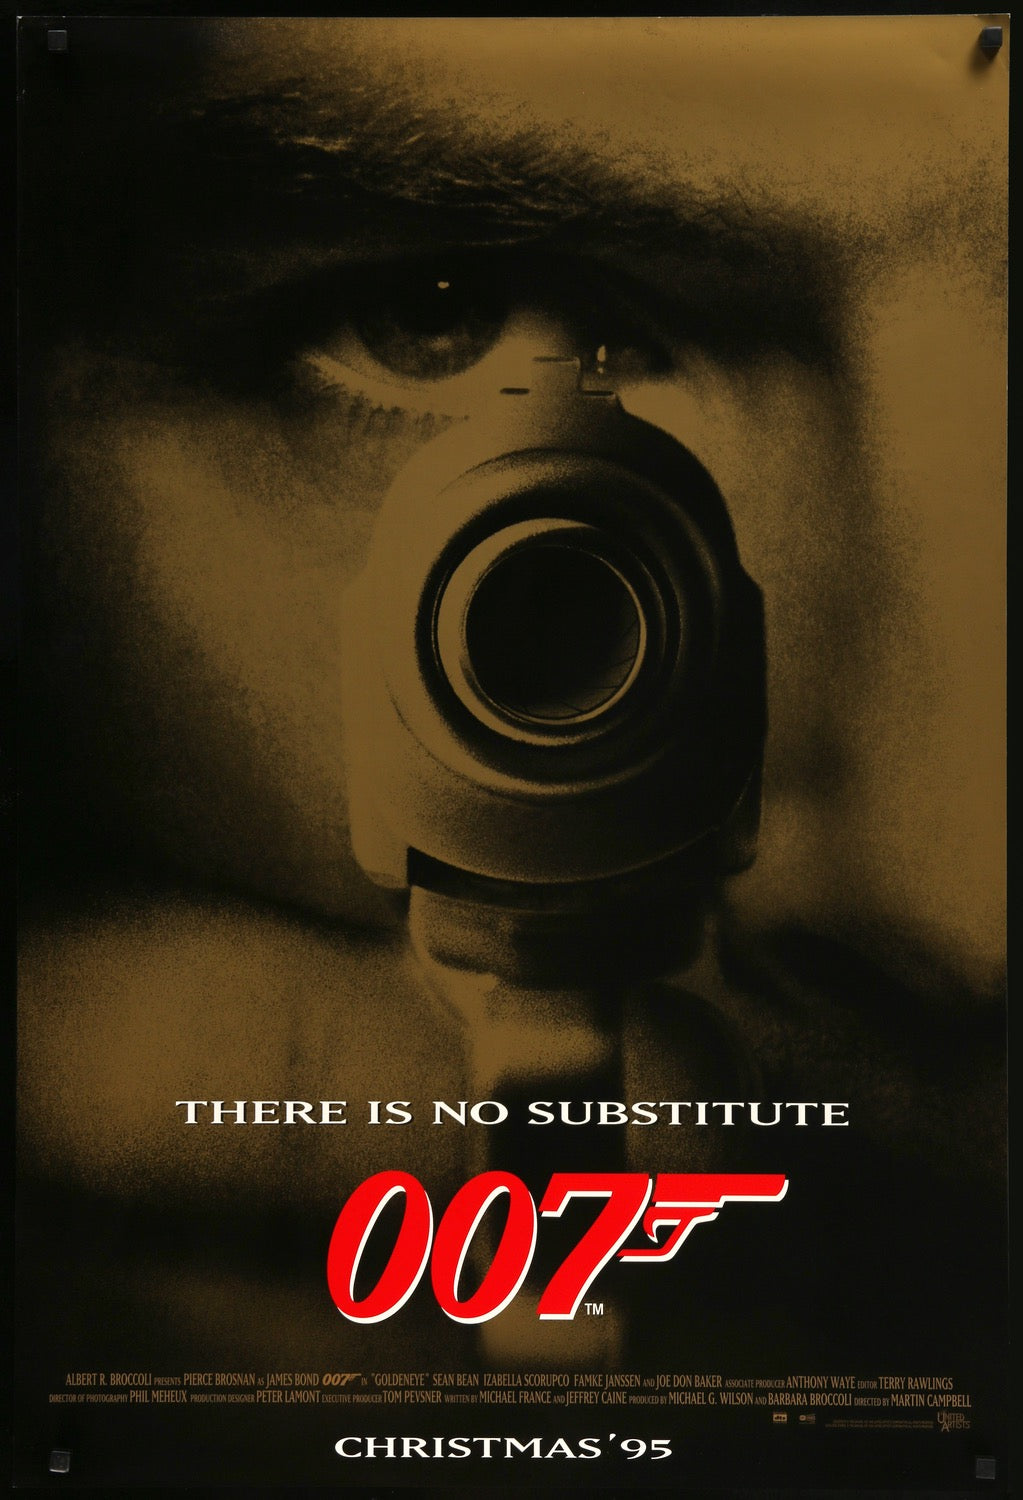 GoldenEye (1995) original movie poster for sale at Original Film Art